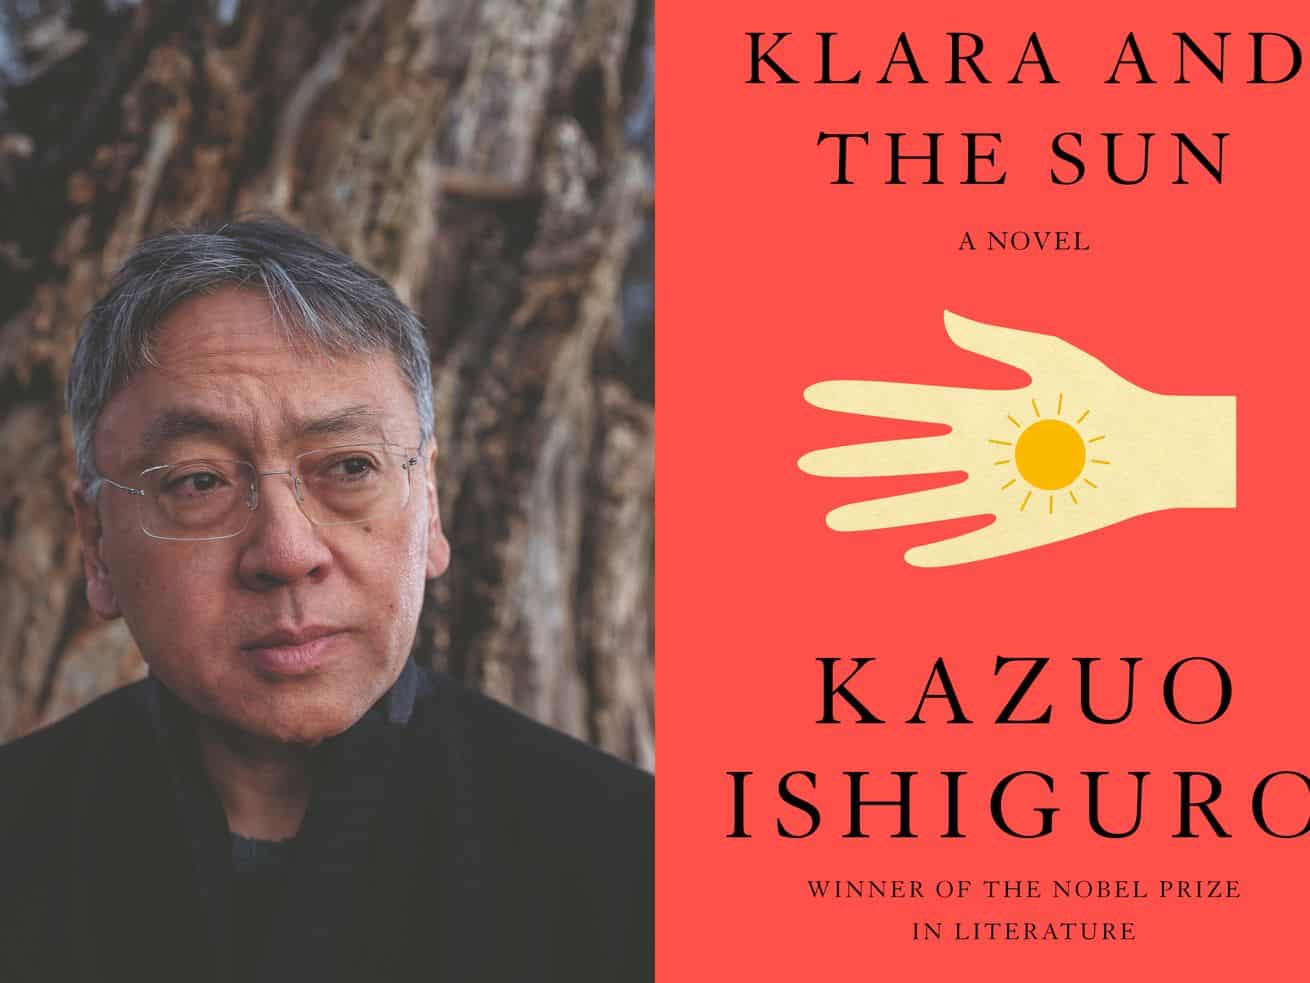 In Kazuo Ishiguro’s sweet new novel Klara and the Sun, a robot befriends a teenage girl